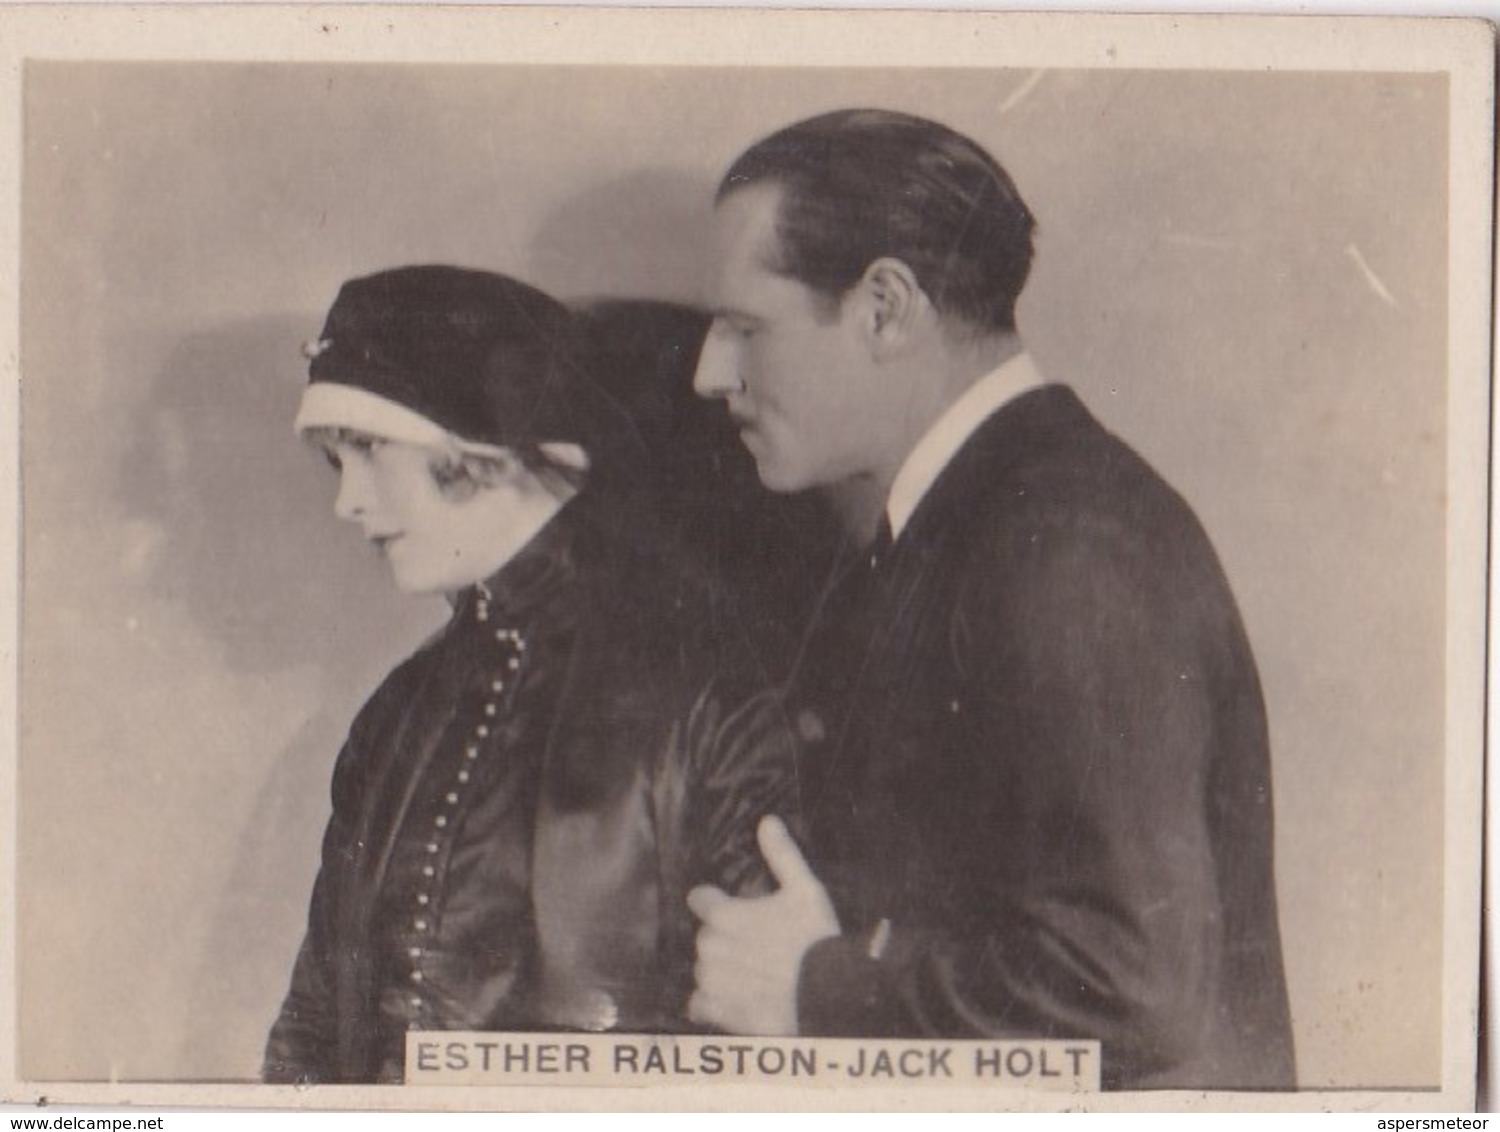 ESTHER RALSTON, JACK HOLT. CIGARRILLOS CRACK. CARD TARJETA COLECCIONABLE TABACO. CIRCA 1940s SIZE 5x6cm - BLEUP - Personalità